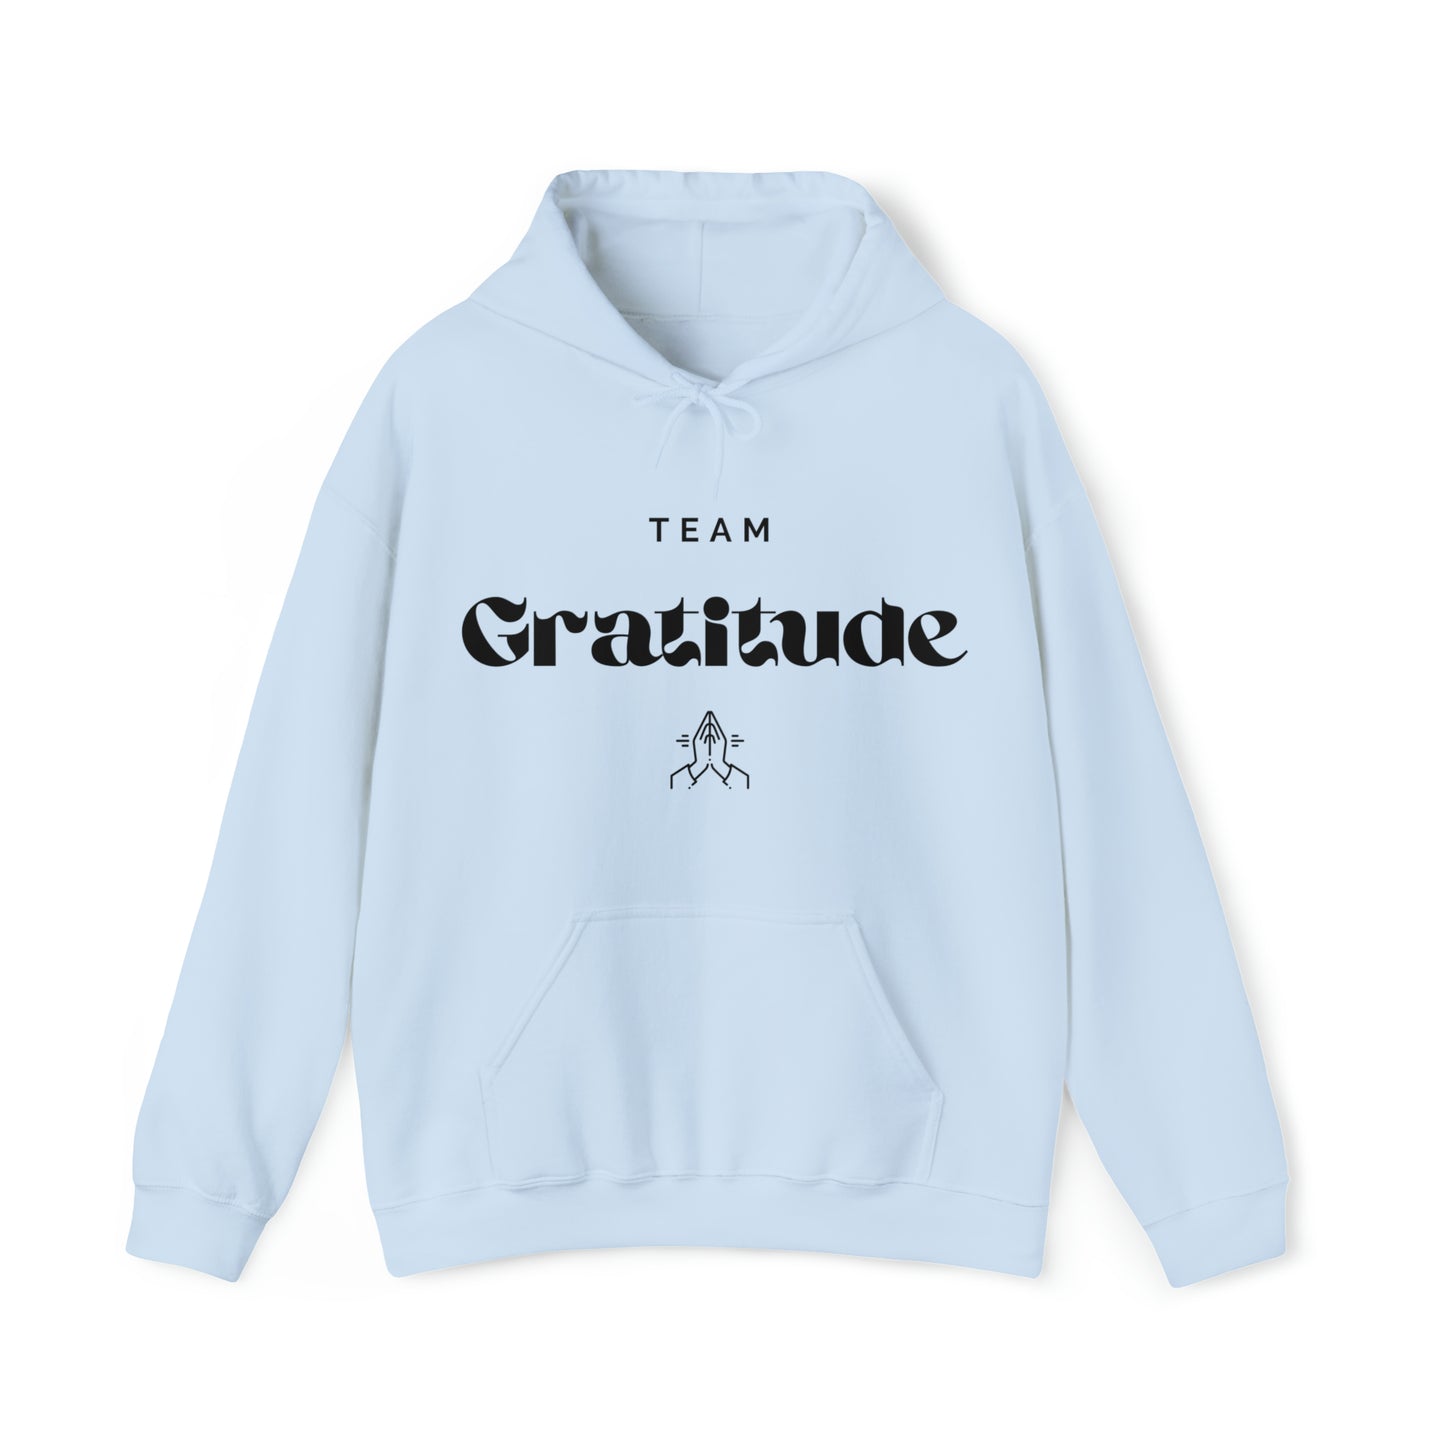 Gratitude Unisex Heavy Blend Hooded Sweatshirt - Comfort, Style, and Versatility